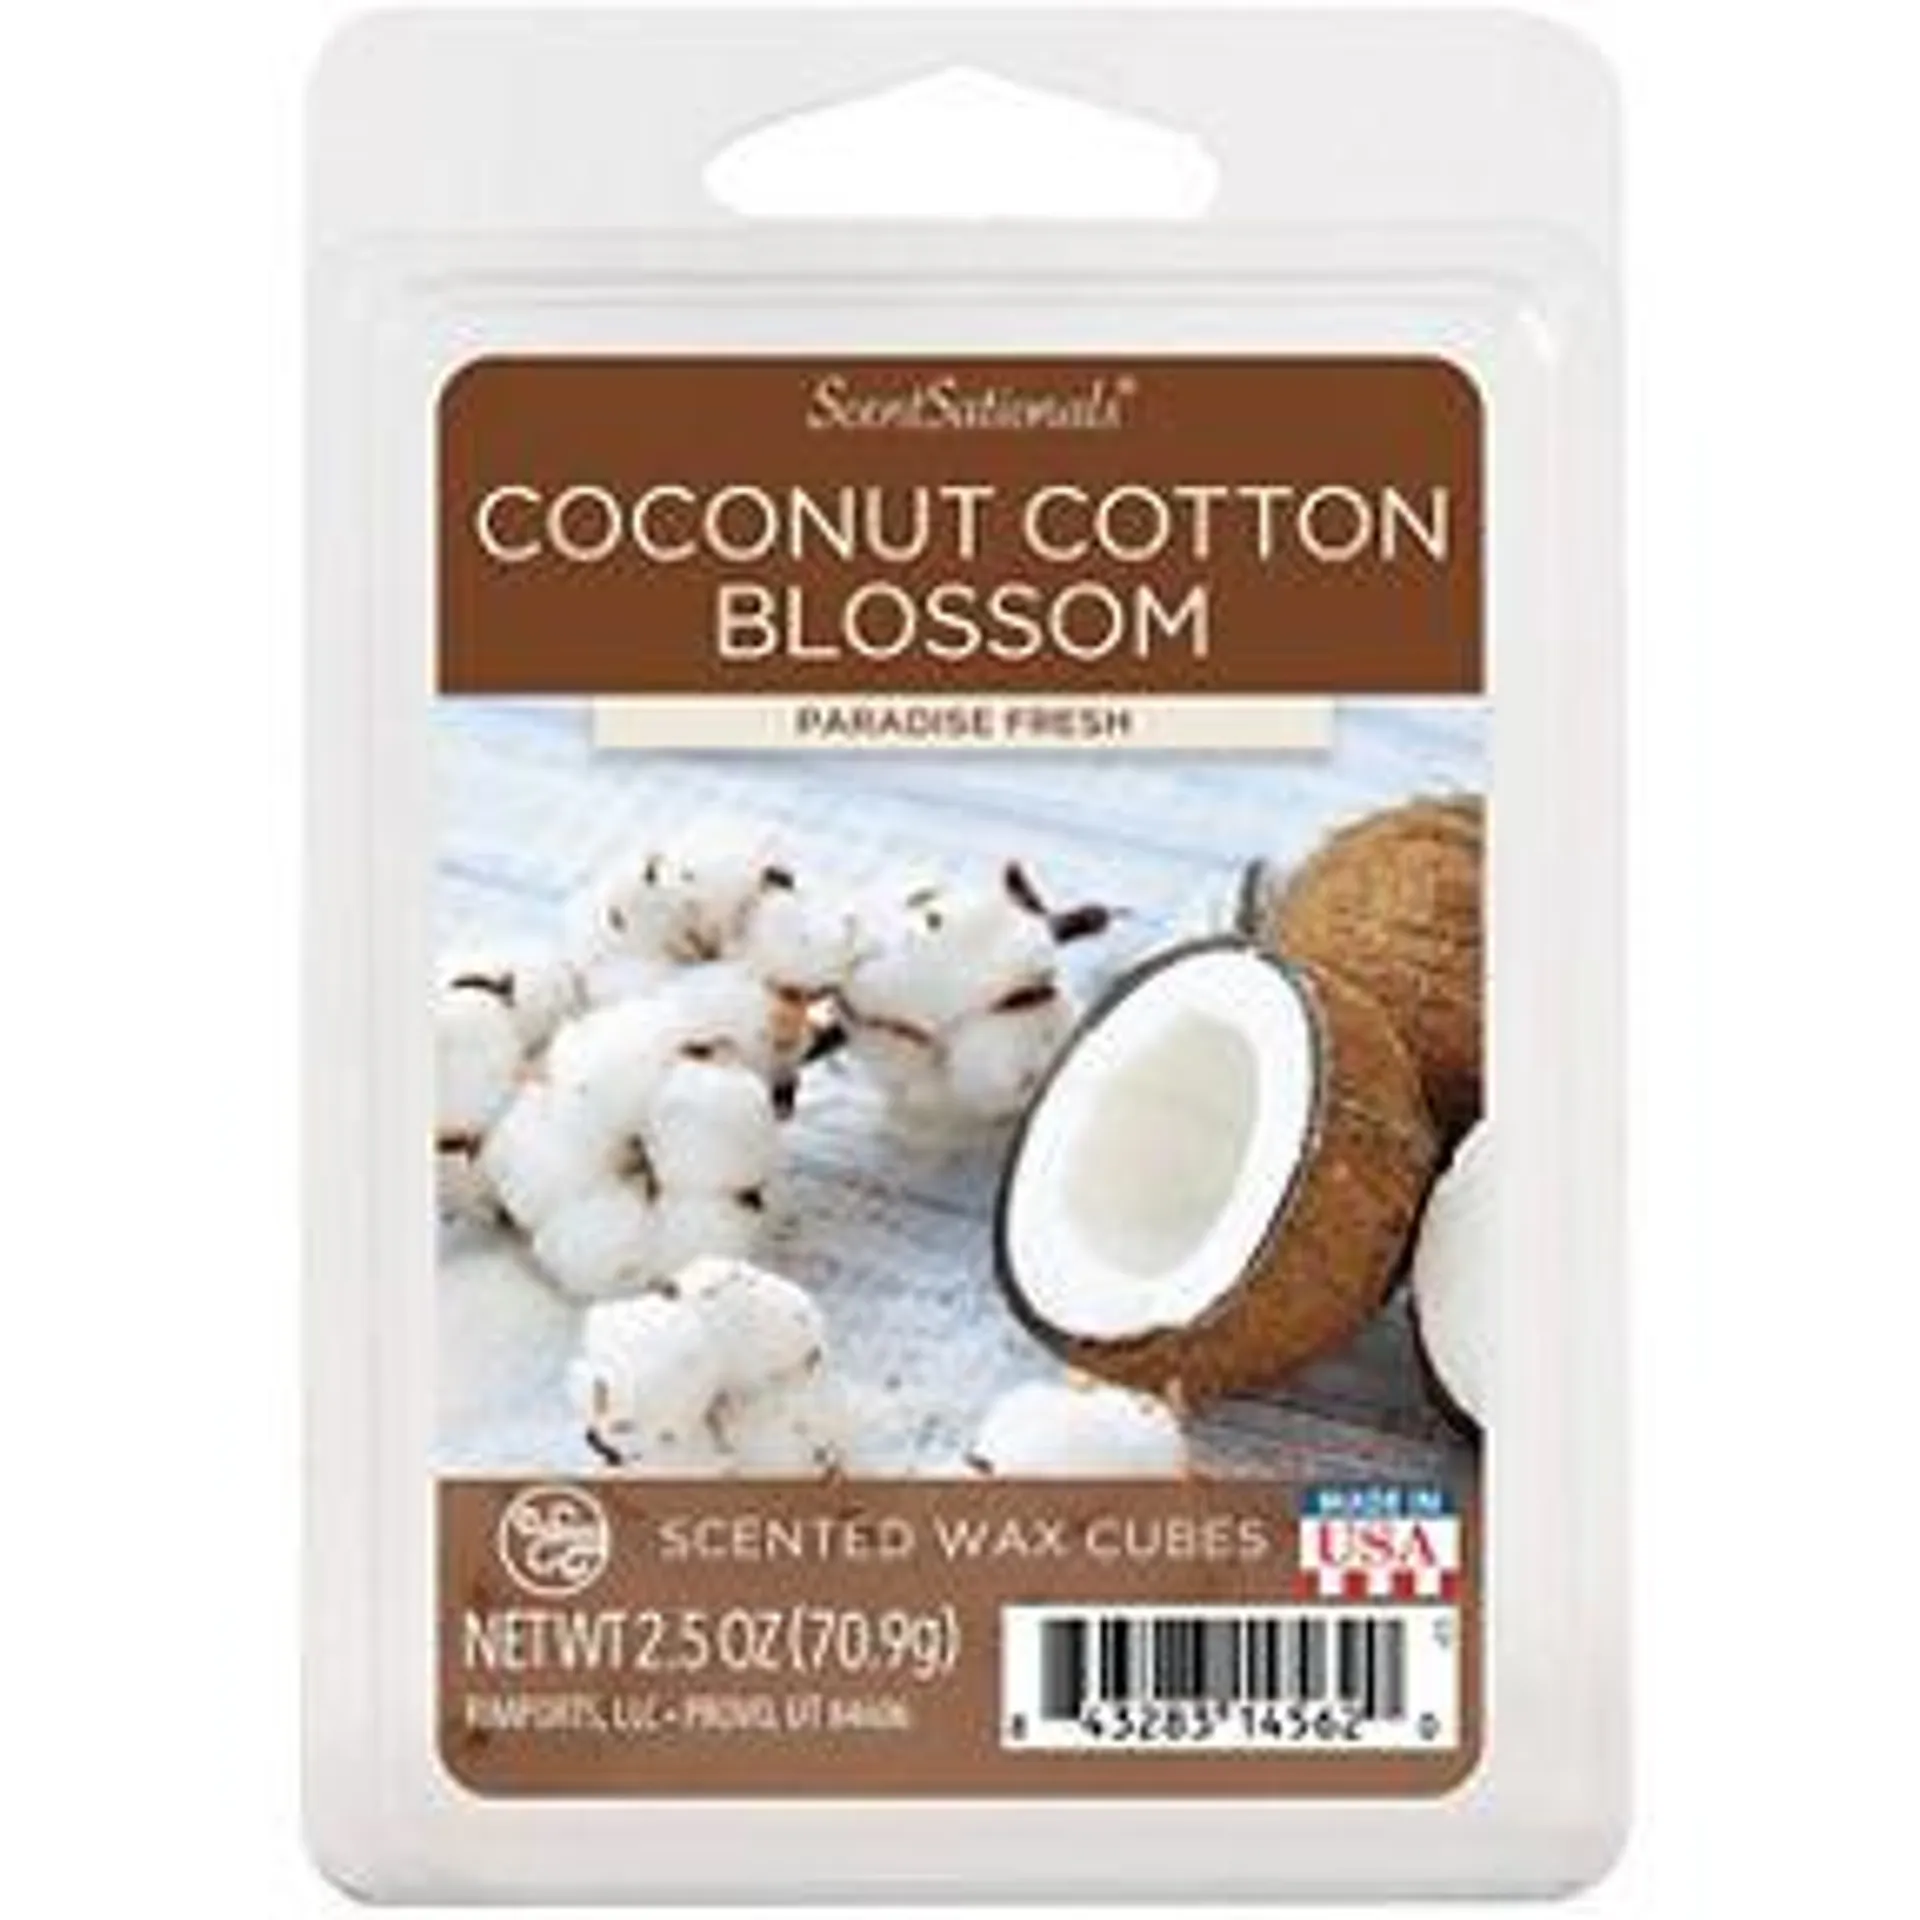 ScentSationals Coconut Cotton Blossom Wax Cubes